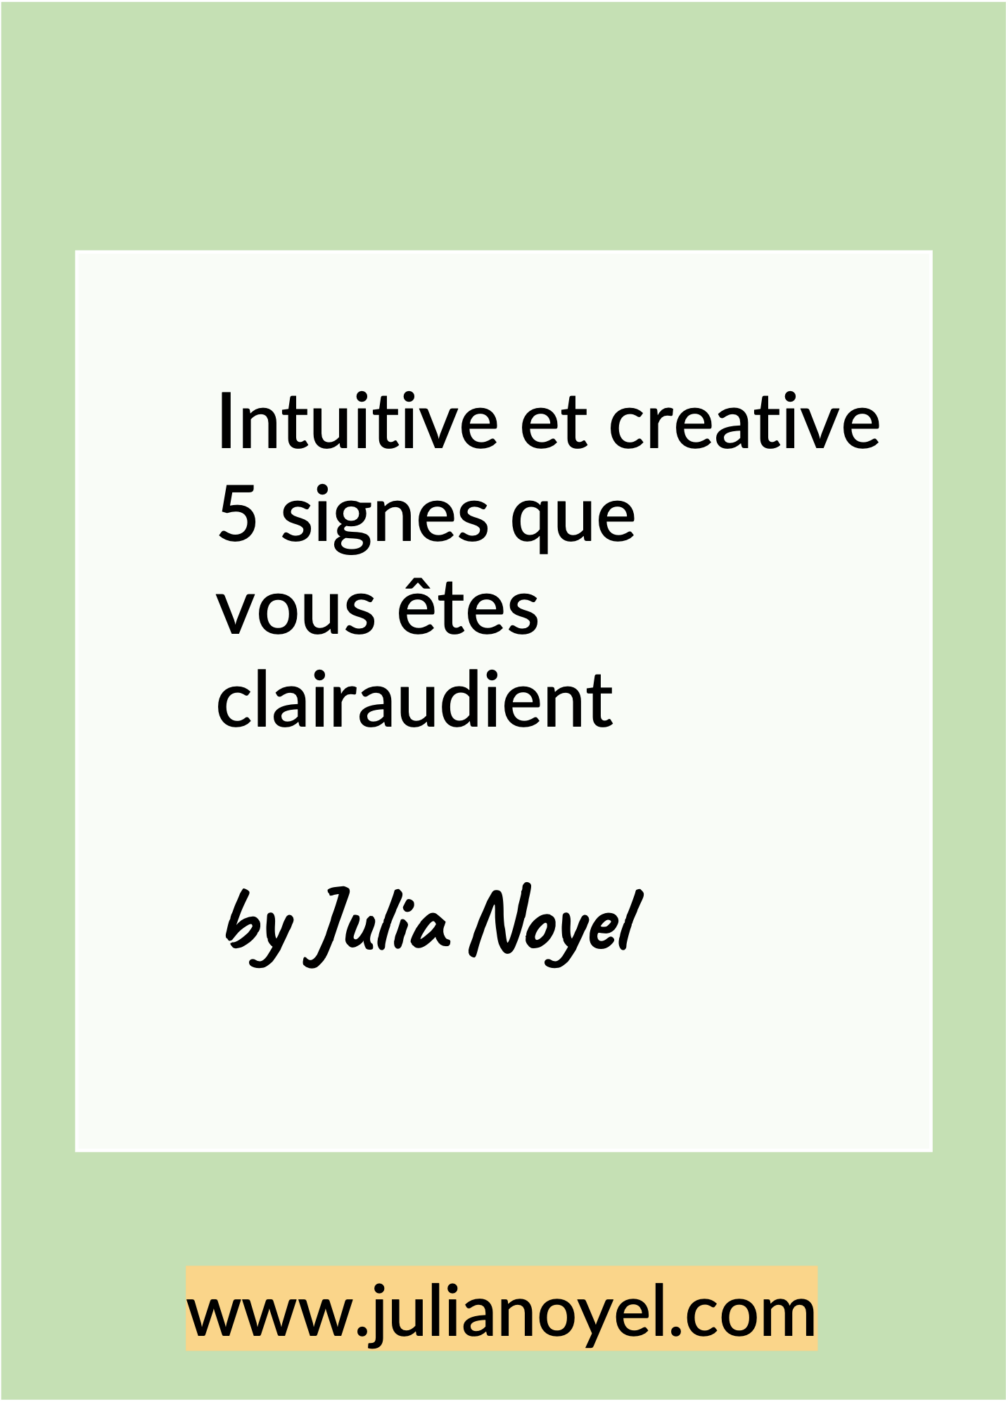 Intuitive et creative 5 signe